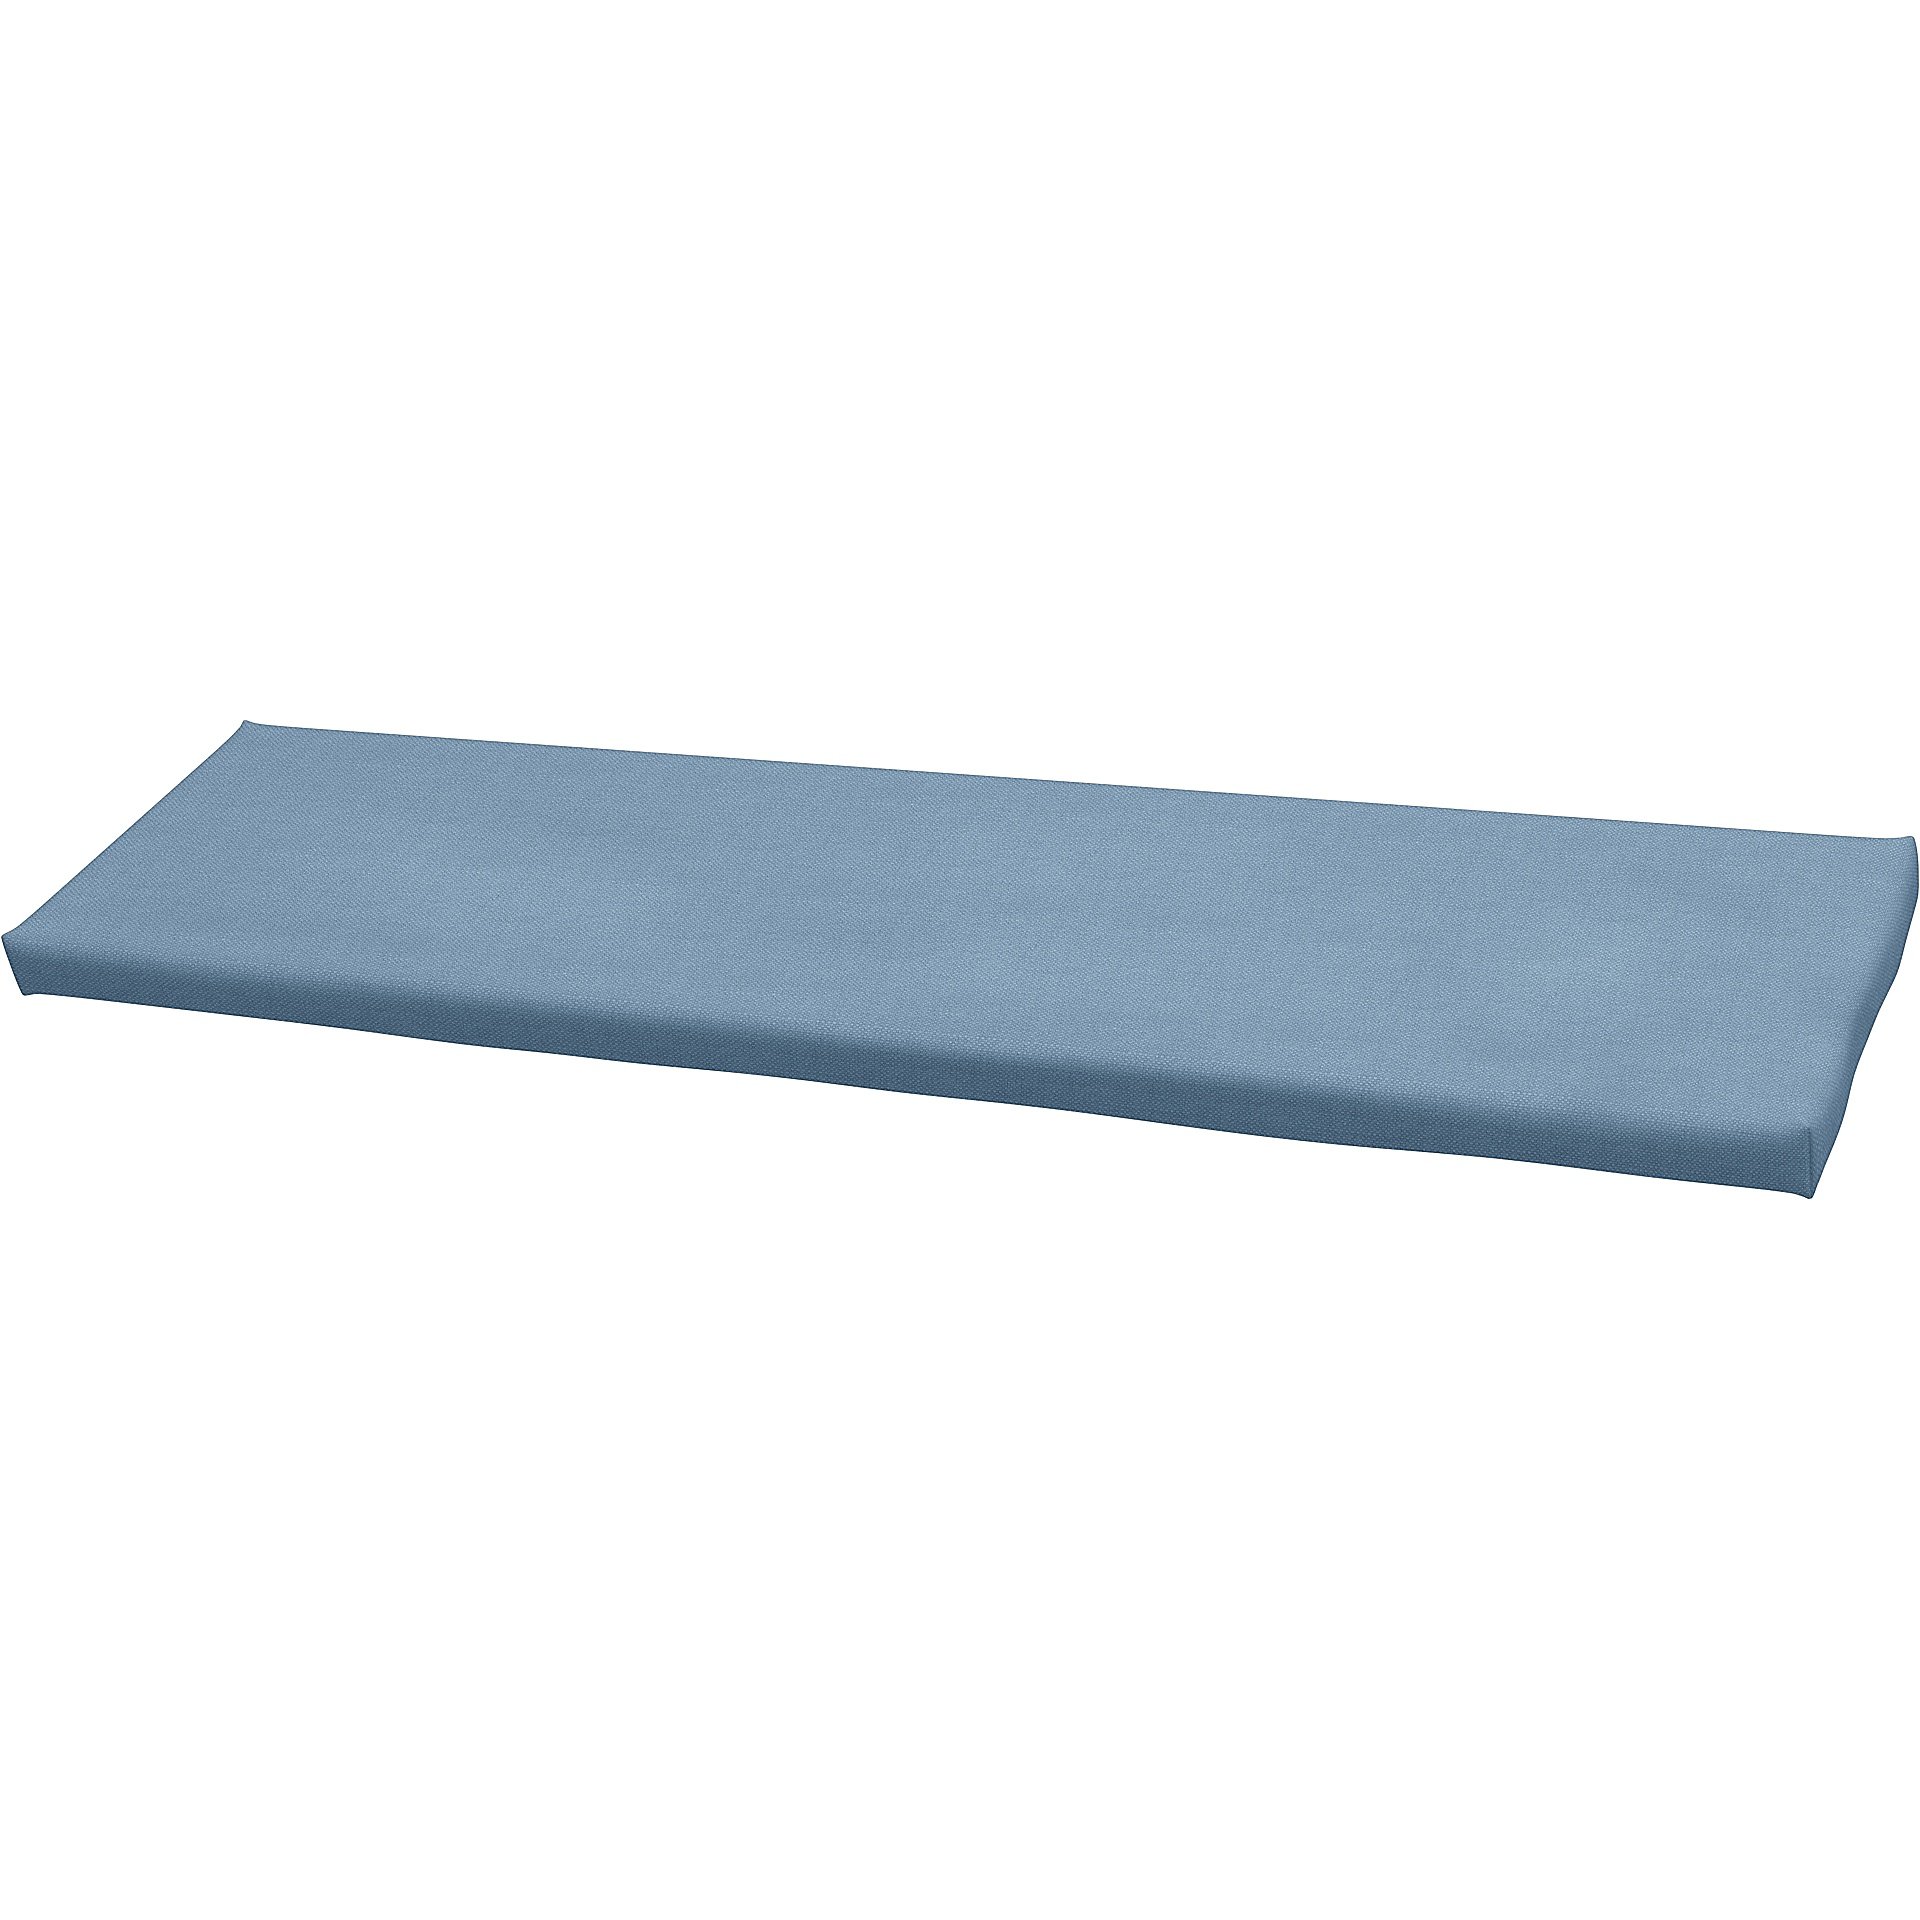 IKEA - Universal bench cushion cover 120x35x3,5 cm, Vintage Blue, Linen - Bemz